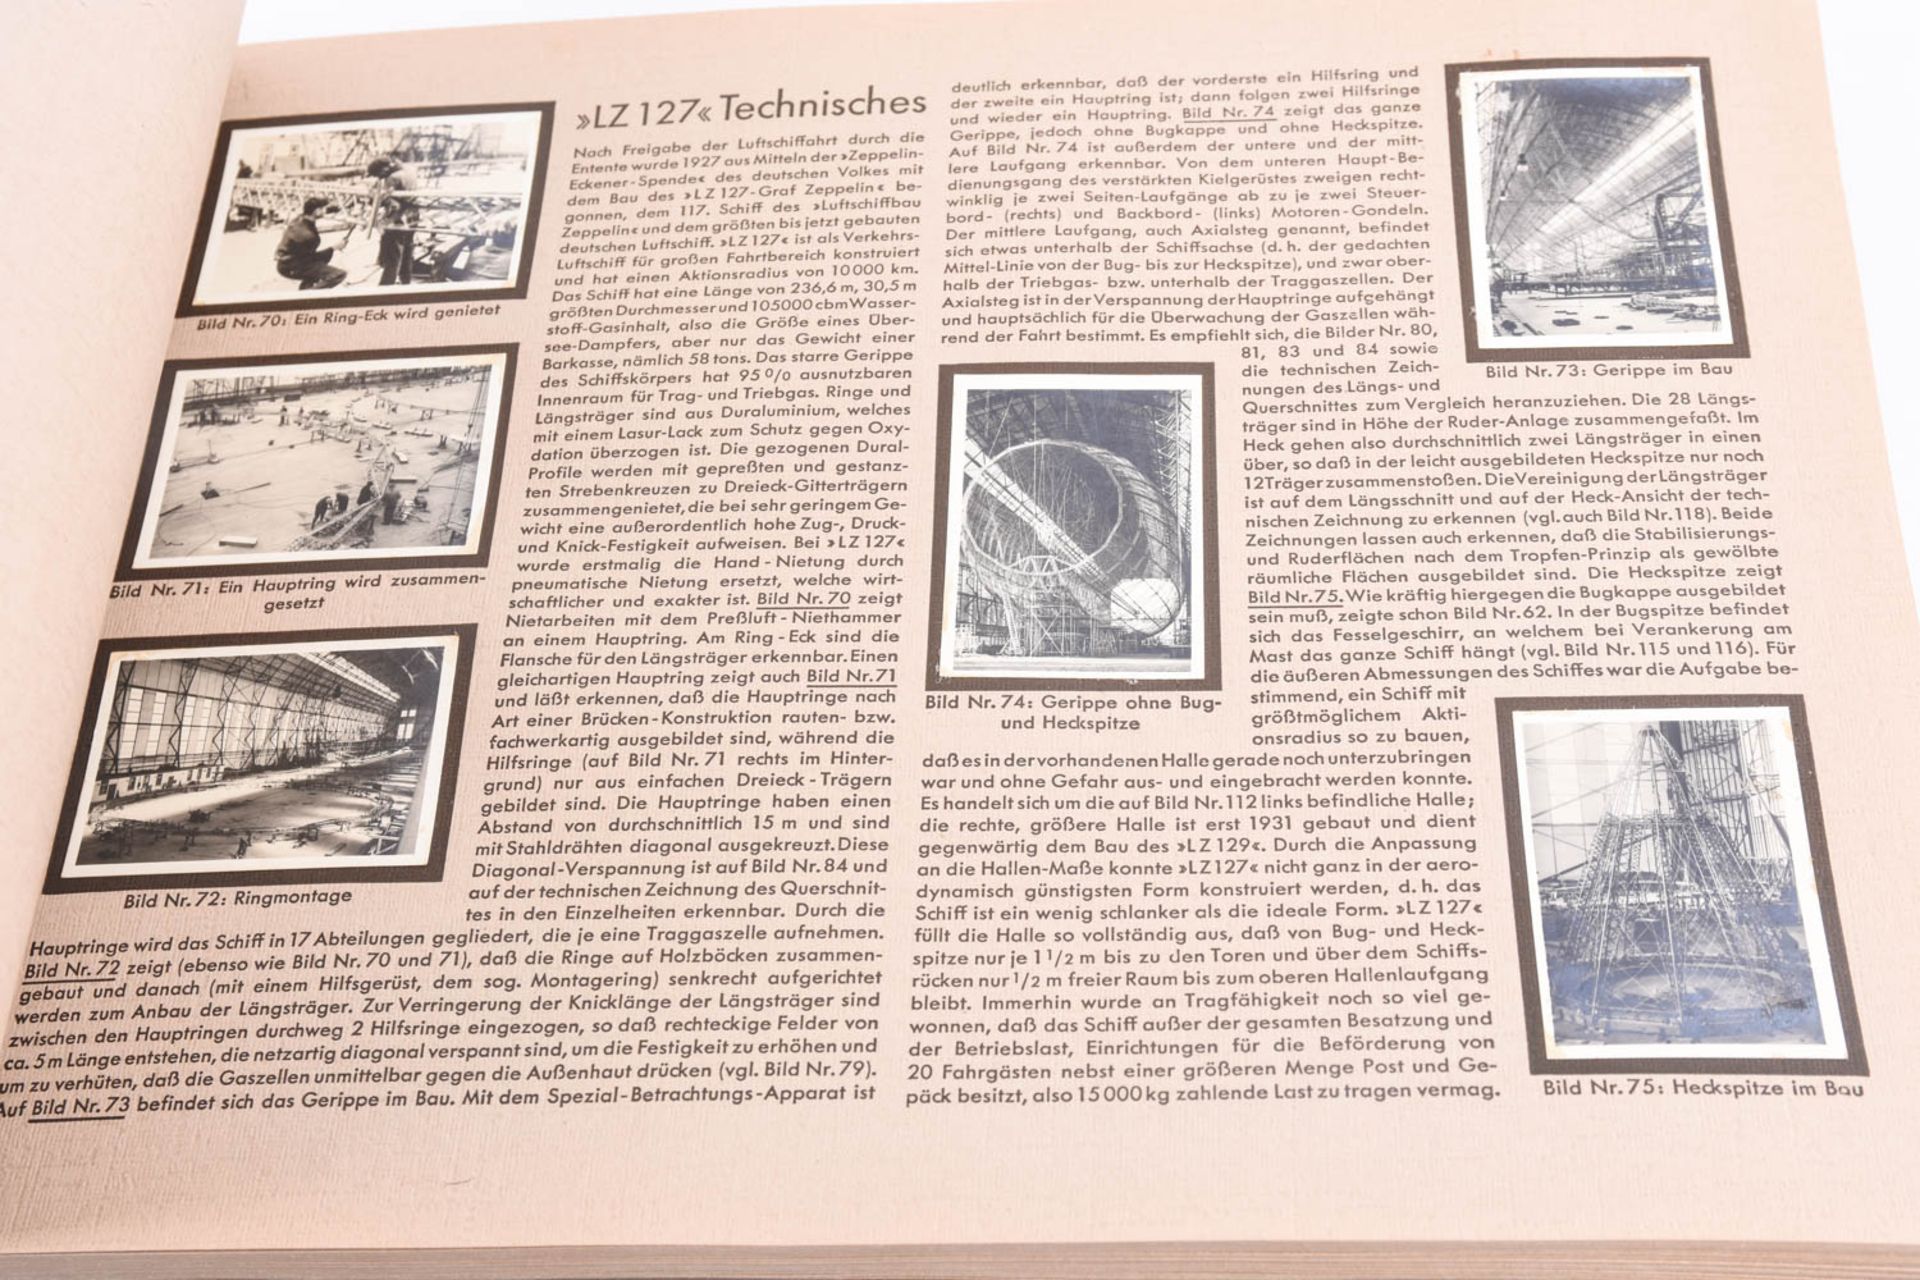 Zeppelin-Weltfahrten Buch, 1932 - Image 4 of 9